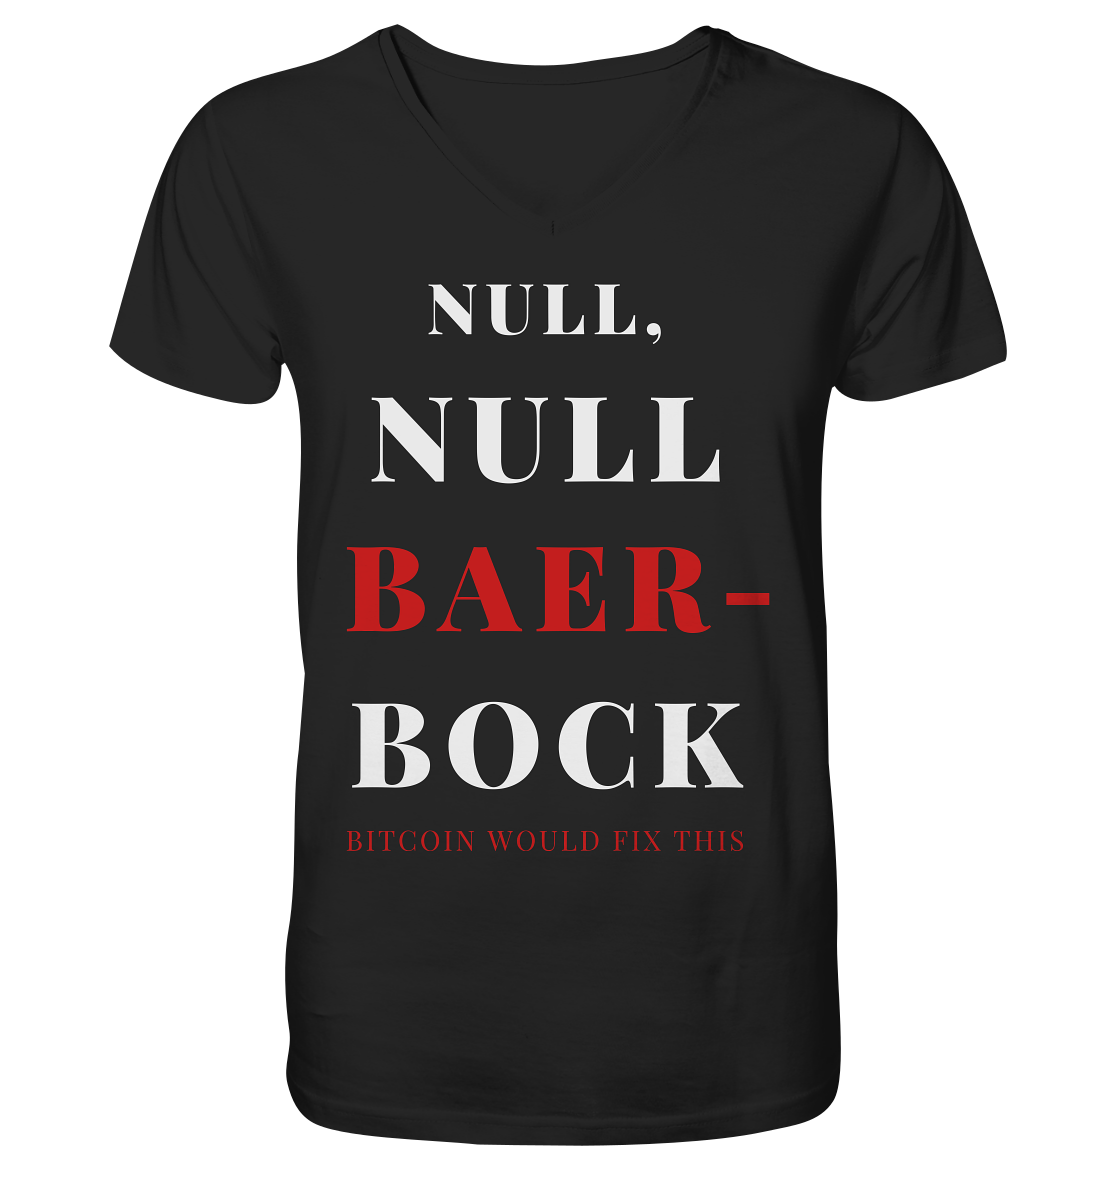 NULL, NULL BAER-BOCK - BITCOIN WOULD FIX... - STUDY BITCOIN   - Mens Organic V-Neck Shirt